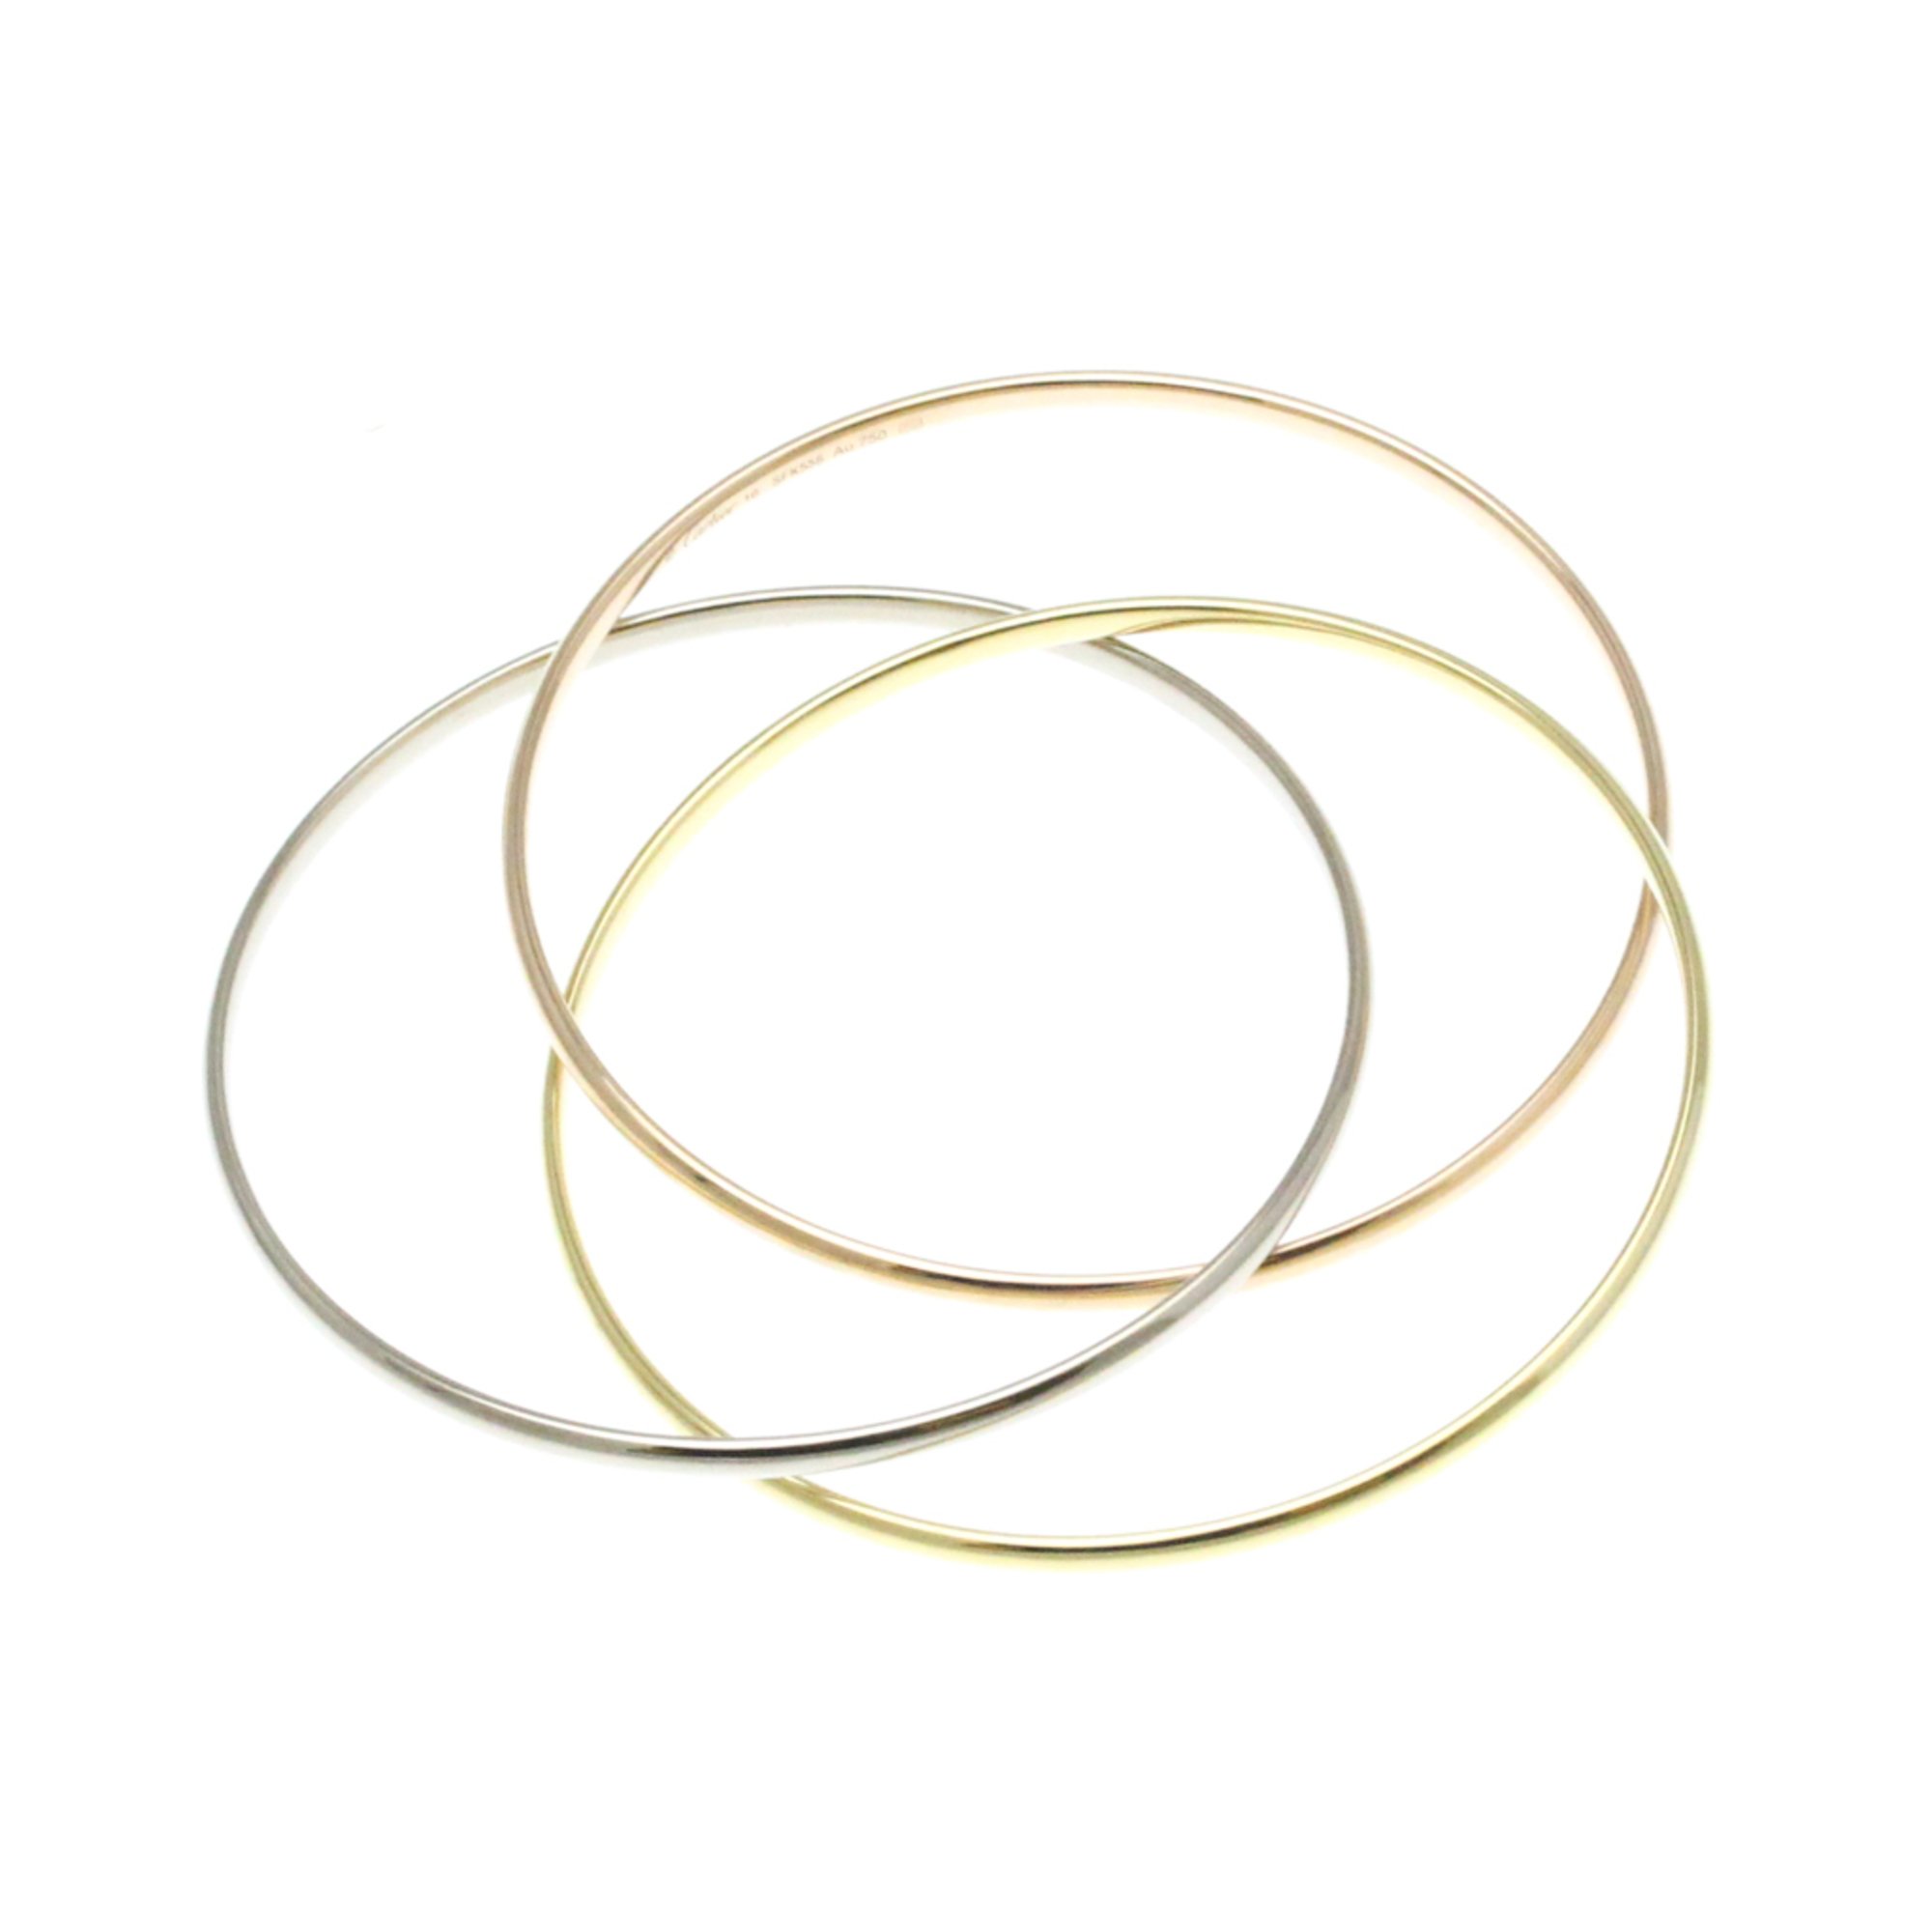 Cartier Trinity Bangle Pink Gold (18K),White Gold (18K),Yellow Gold (18K) No Stone Bangle Gold